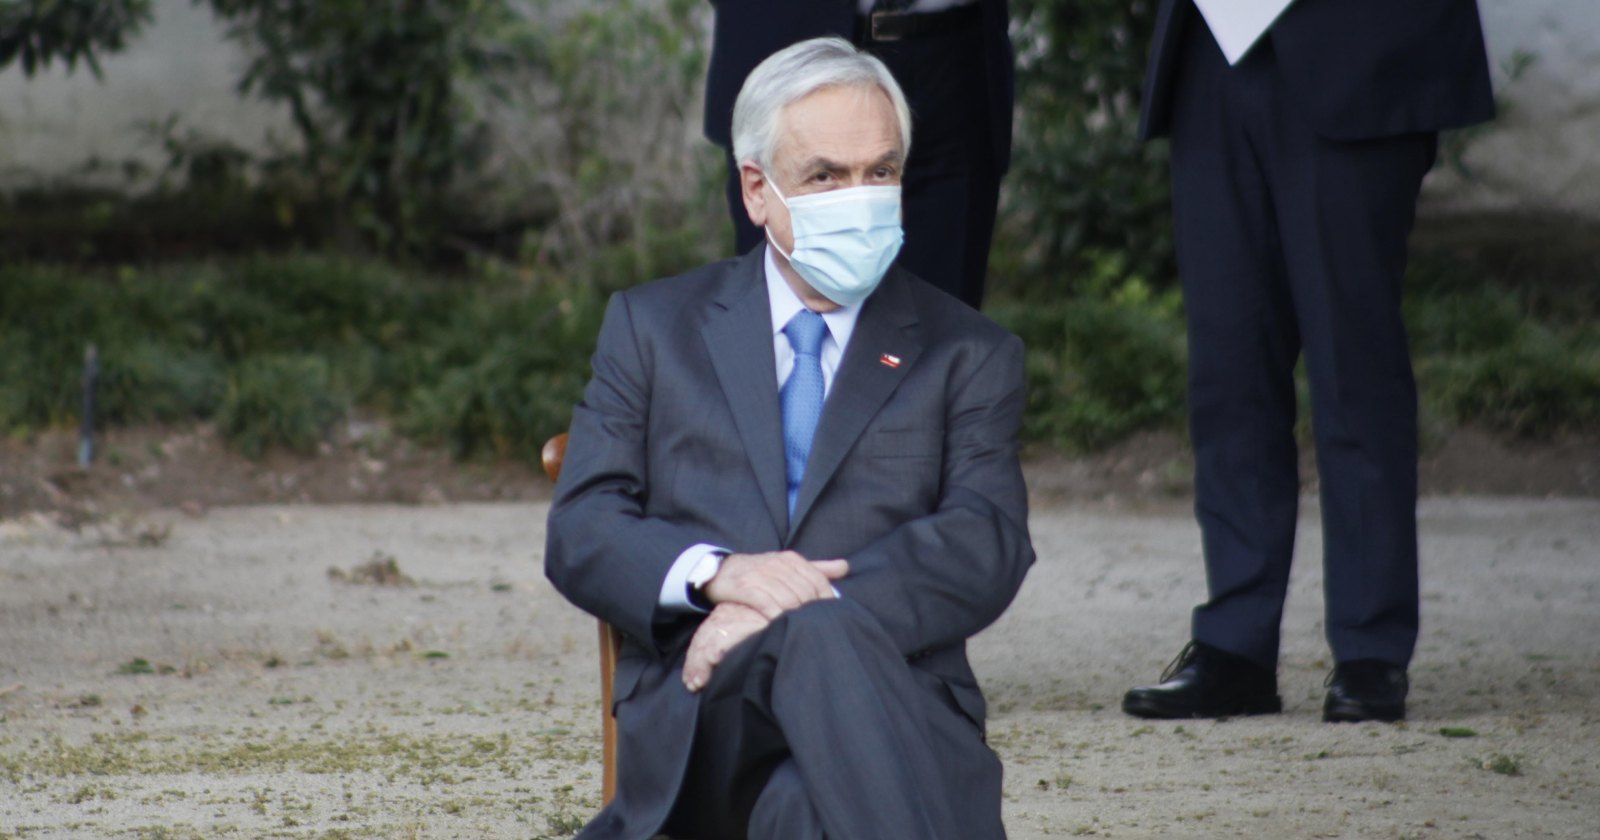 Piñera multa sin mascarila